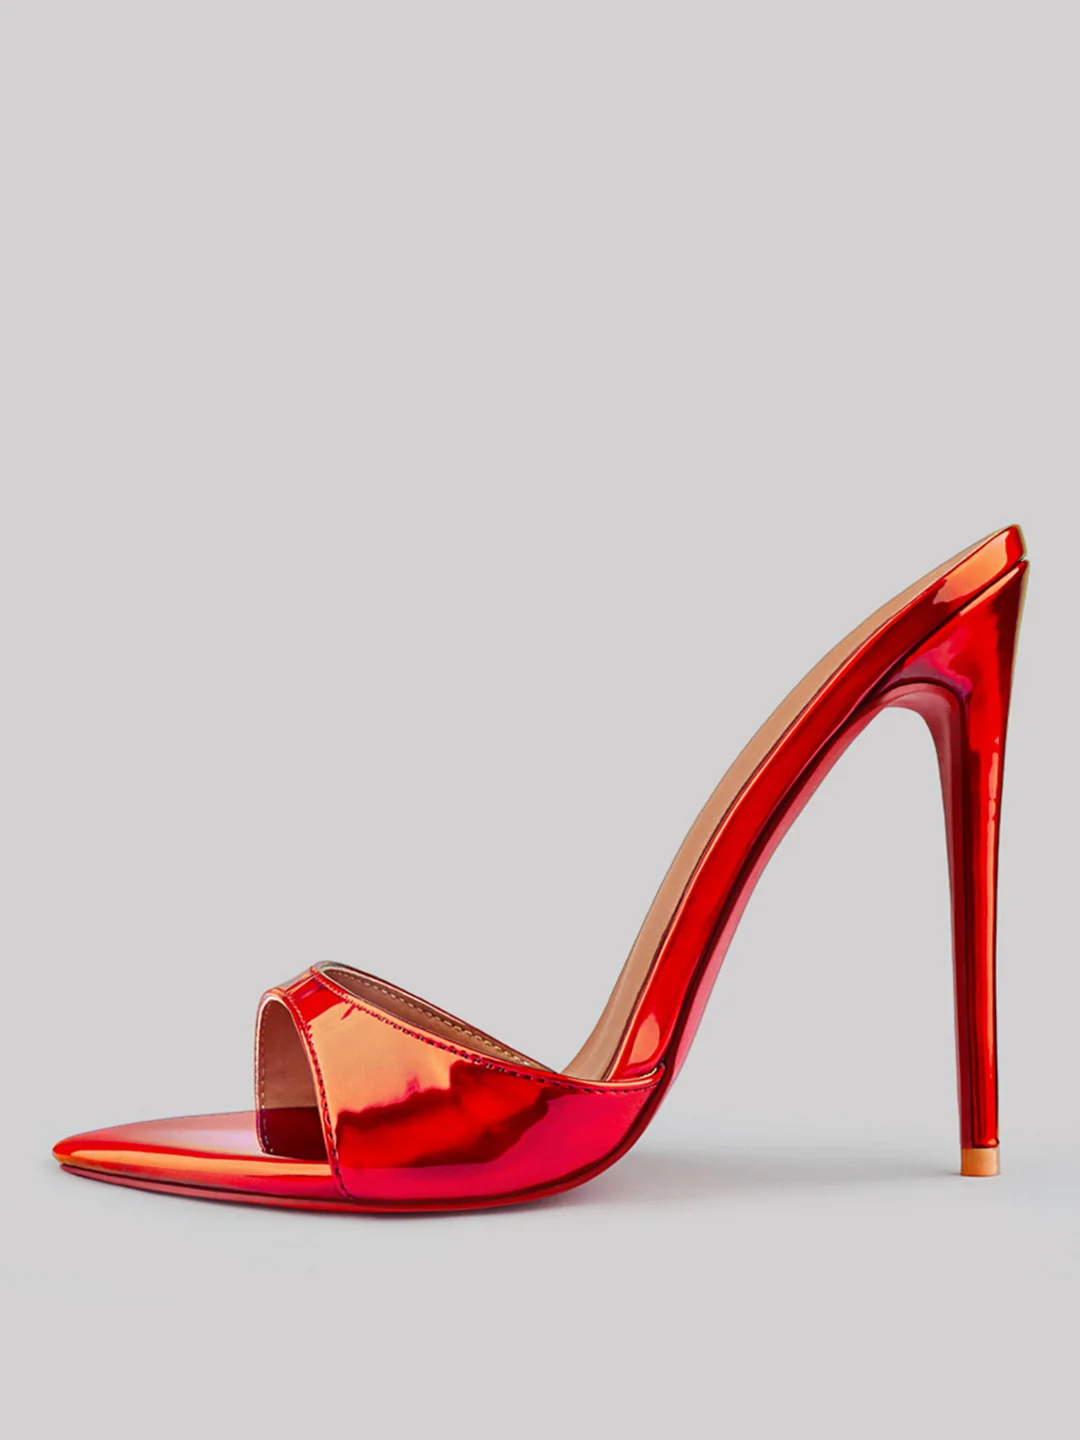 120mm Women's Open Toe Sandals Stiletto Red Bottom High Heels Vegan Mules Colorful